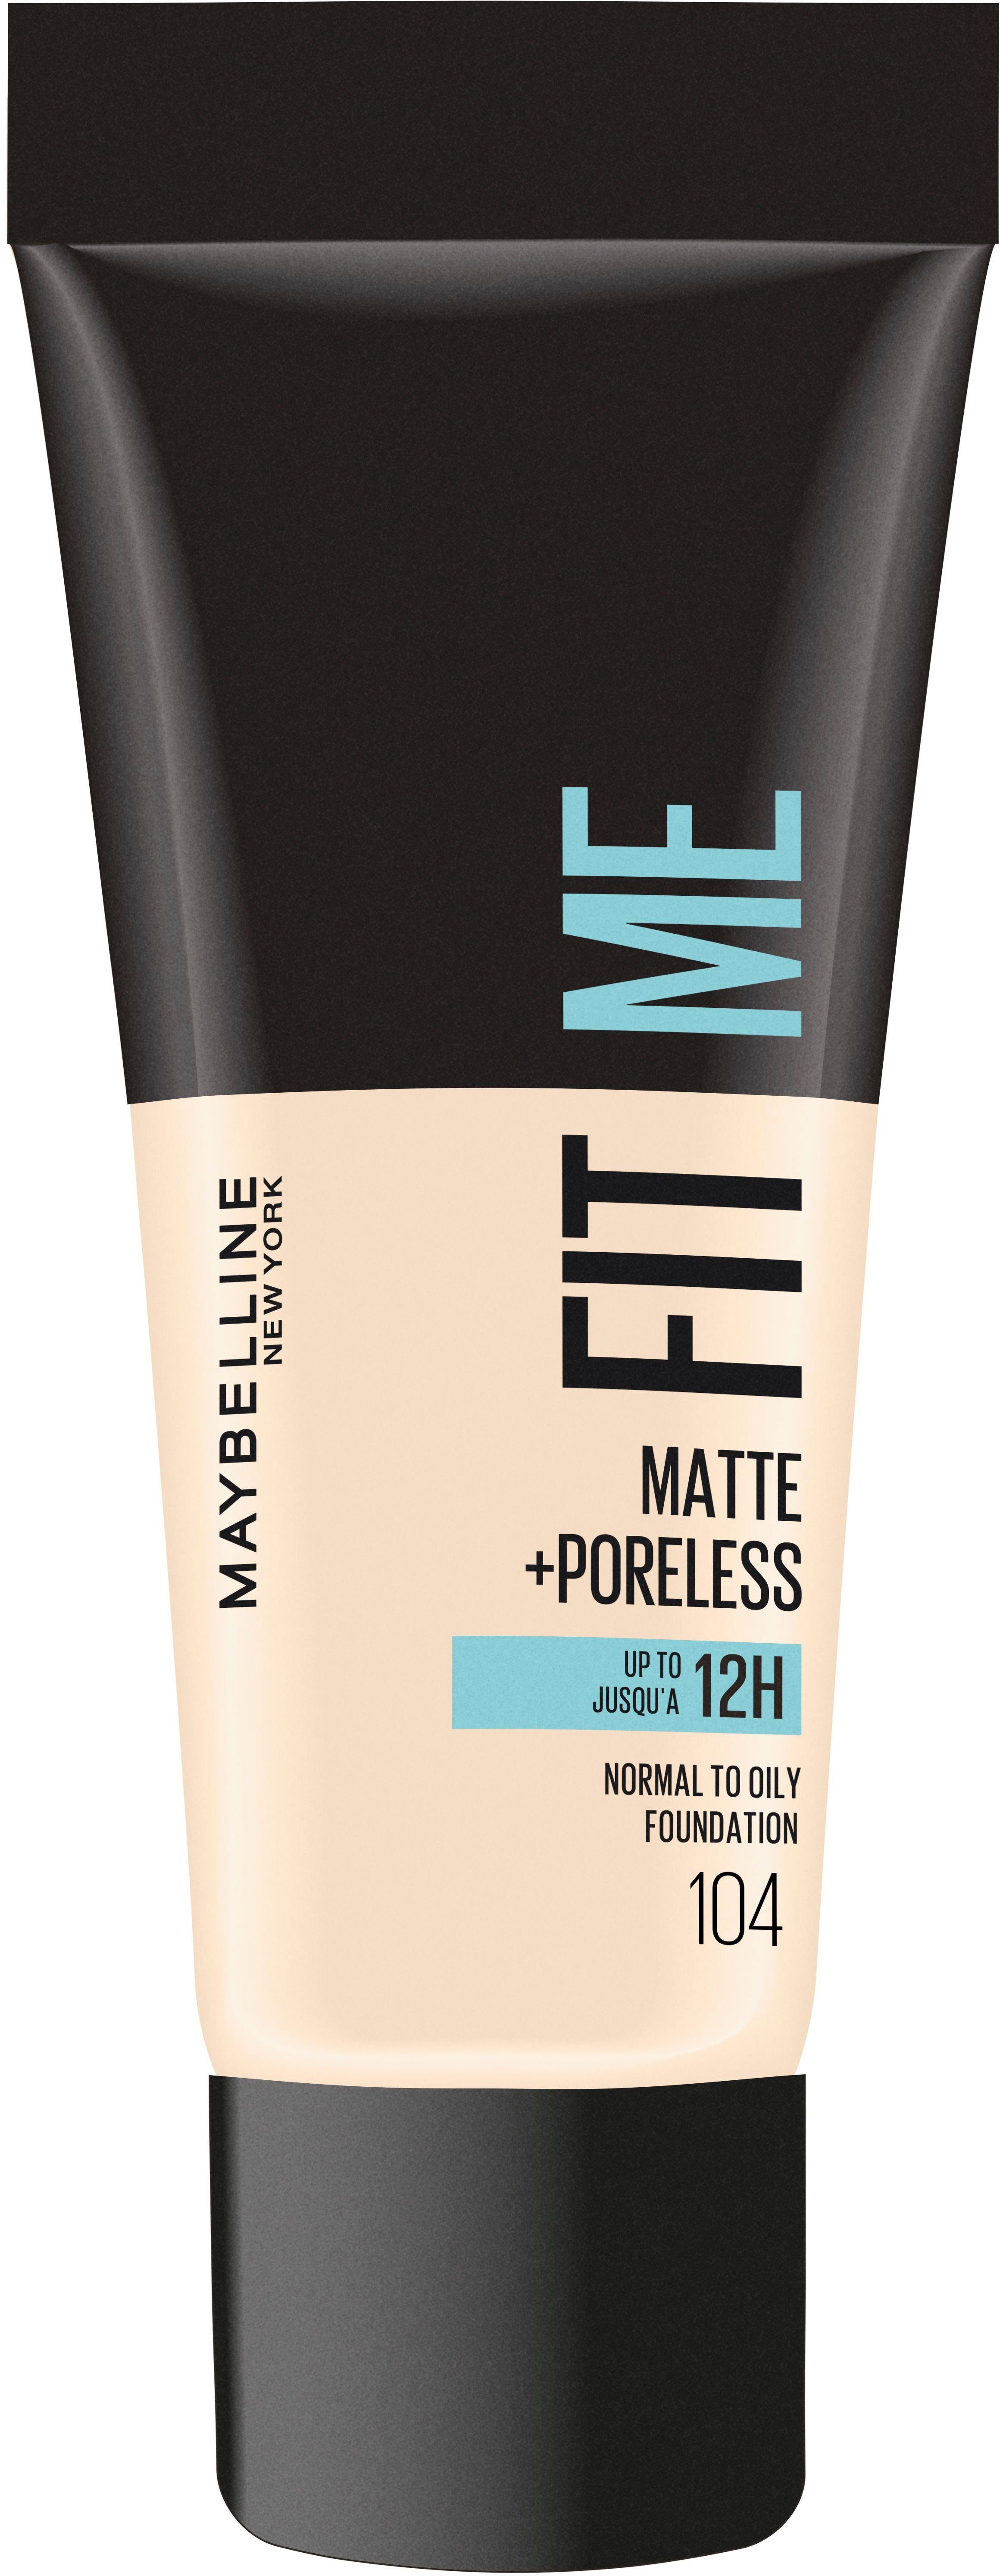 New Poreless York Maybelline YORK NEW Fit Make-Up Me! Foundation + MAYBELLINE Matte